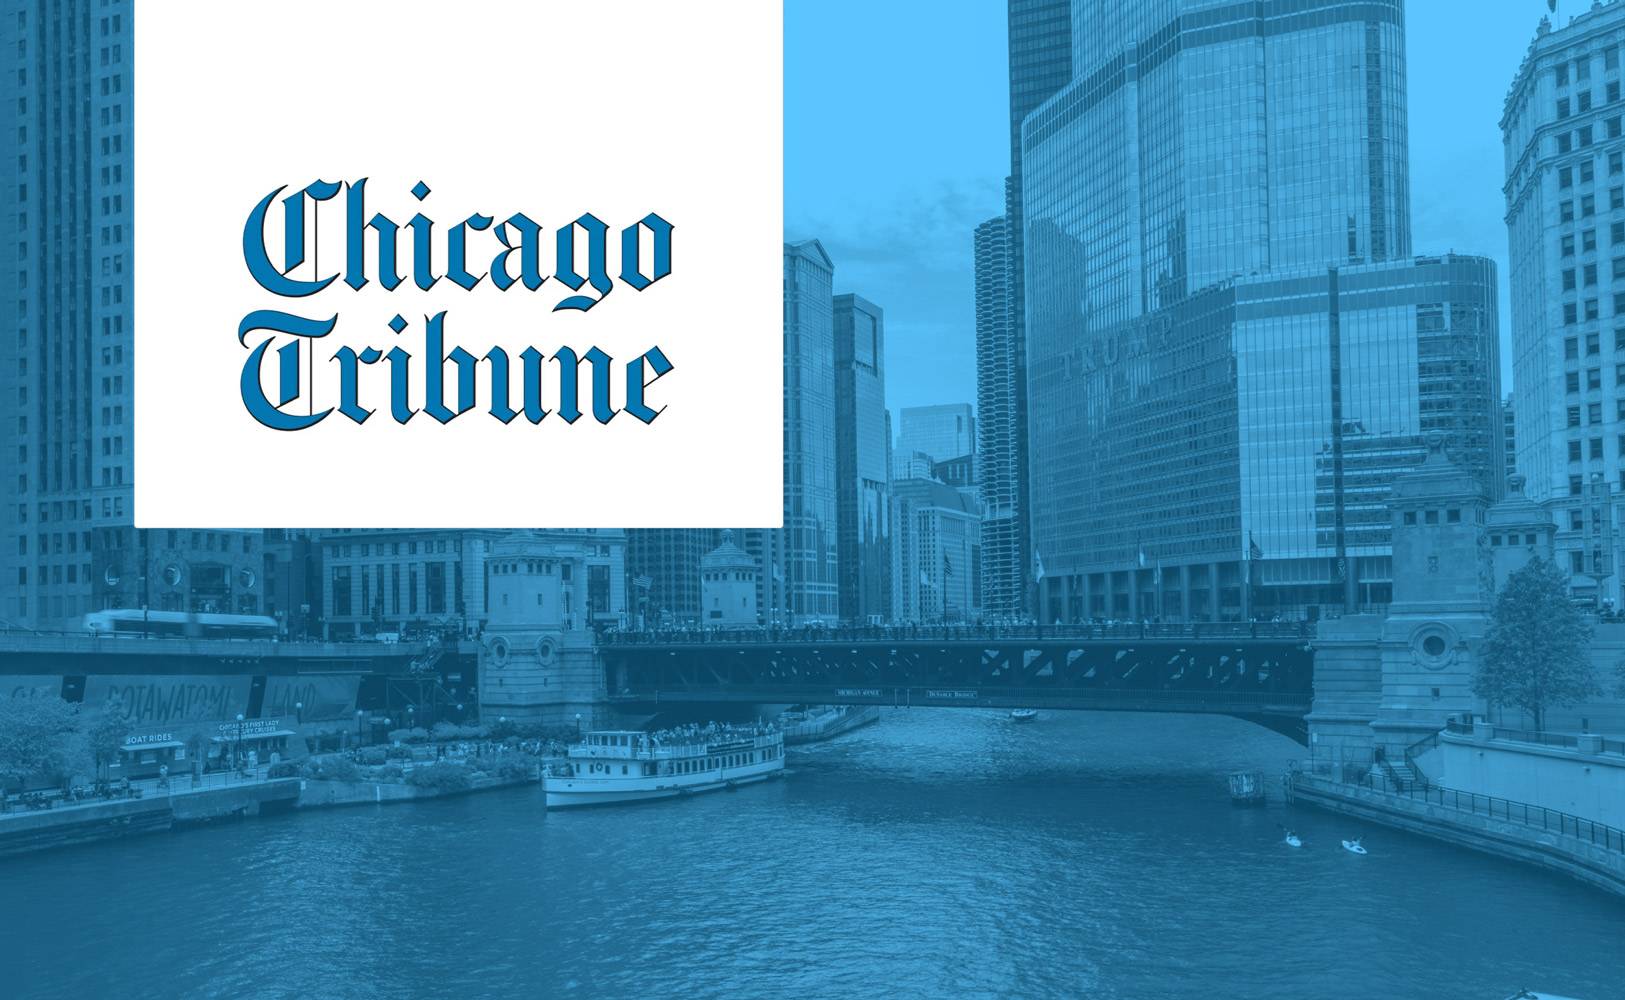 Chicago Tribune Header